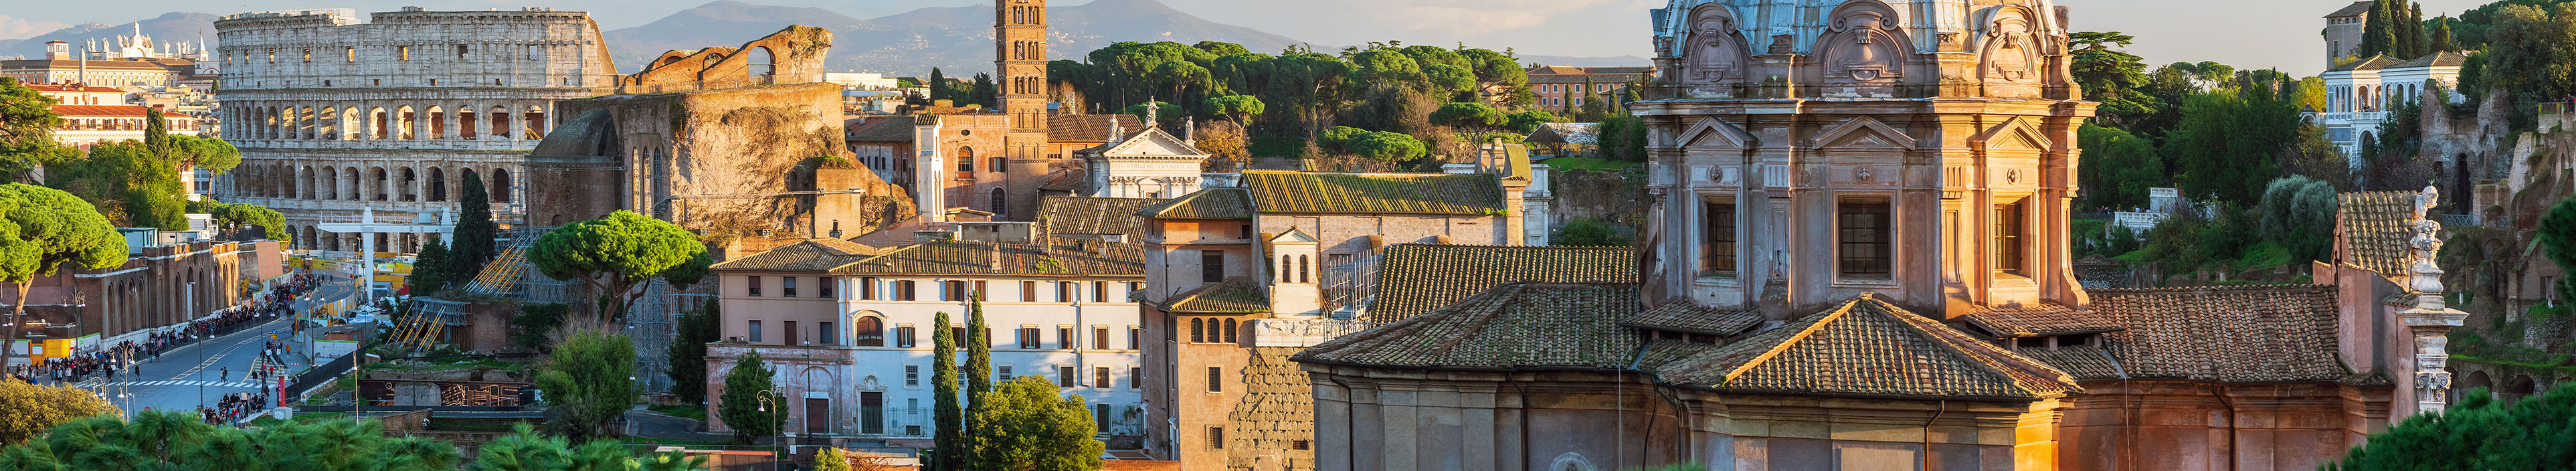 Weites Panorama zum Forum Romanum und Kolosseum in Rom